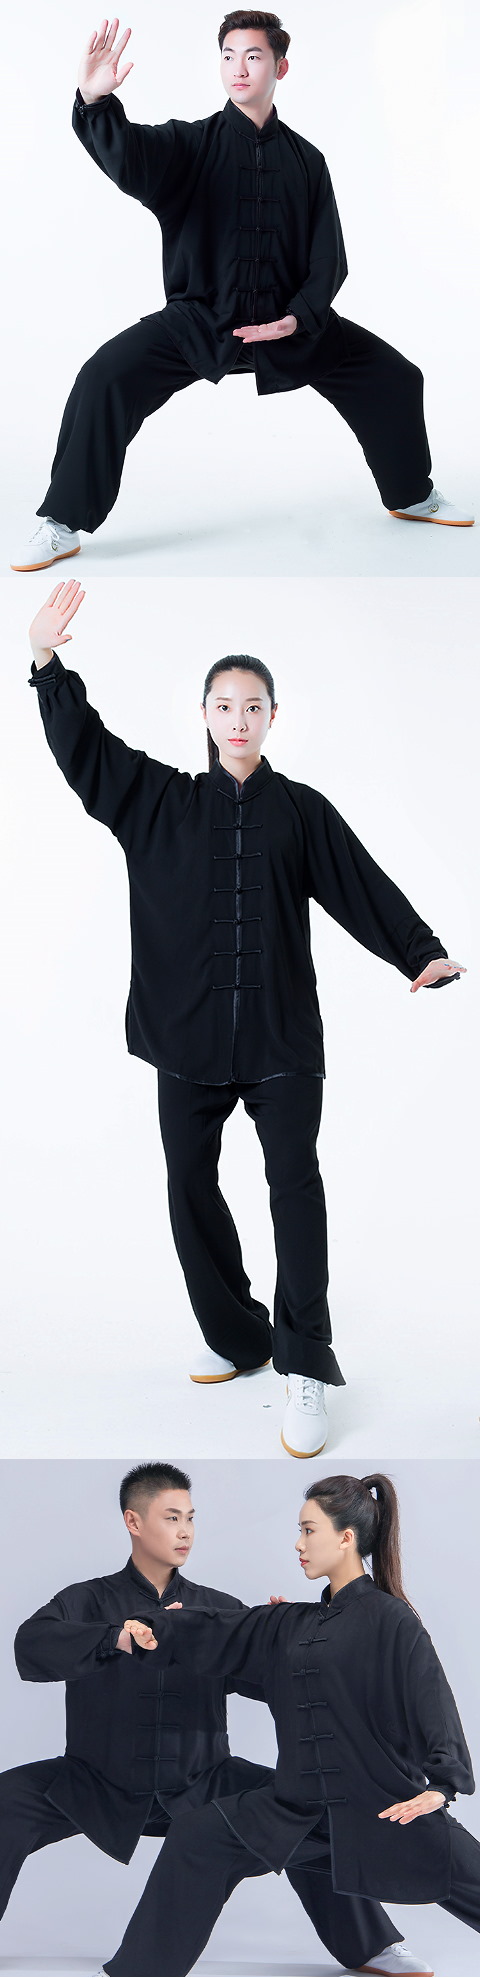 Professional Taichi Kungfu Uniform with Pants - Cotton/Silk - Black (RM)